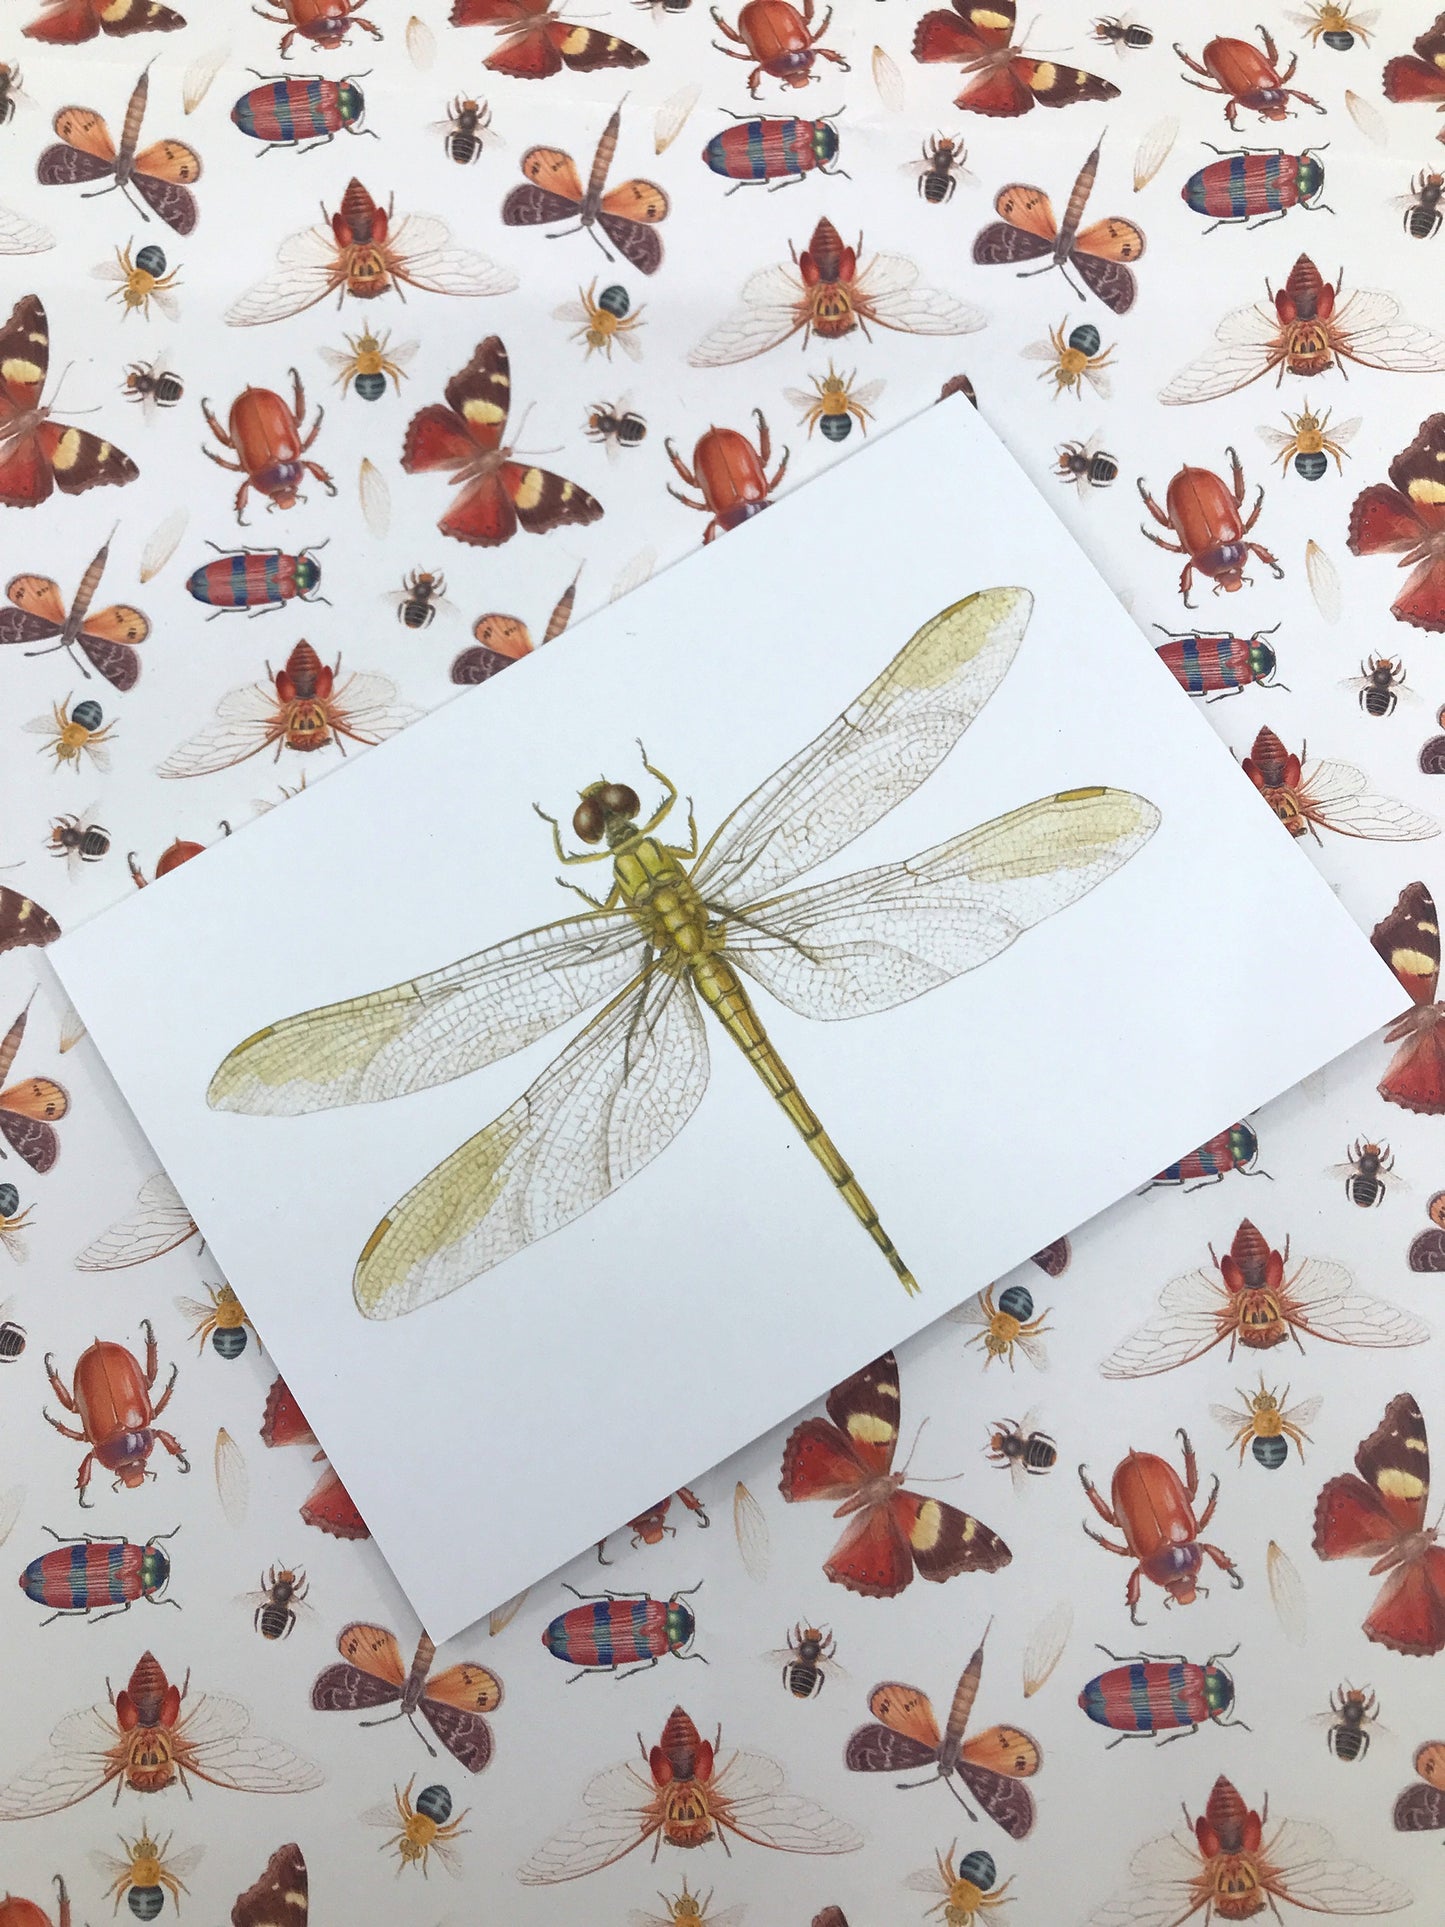 Blue Skimmer Dragonfly Greeting Card